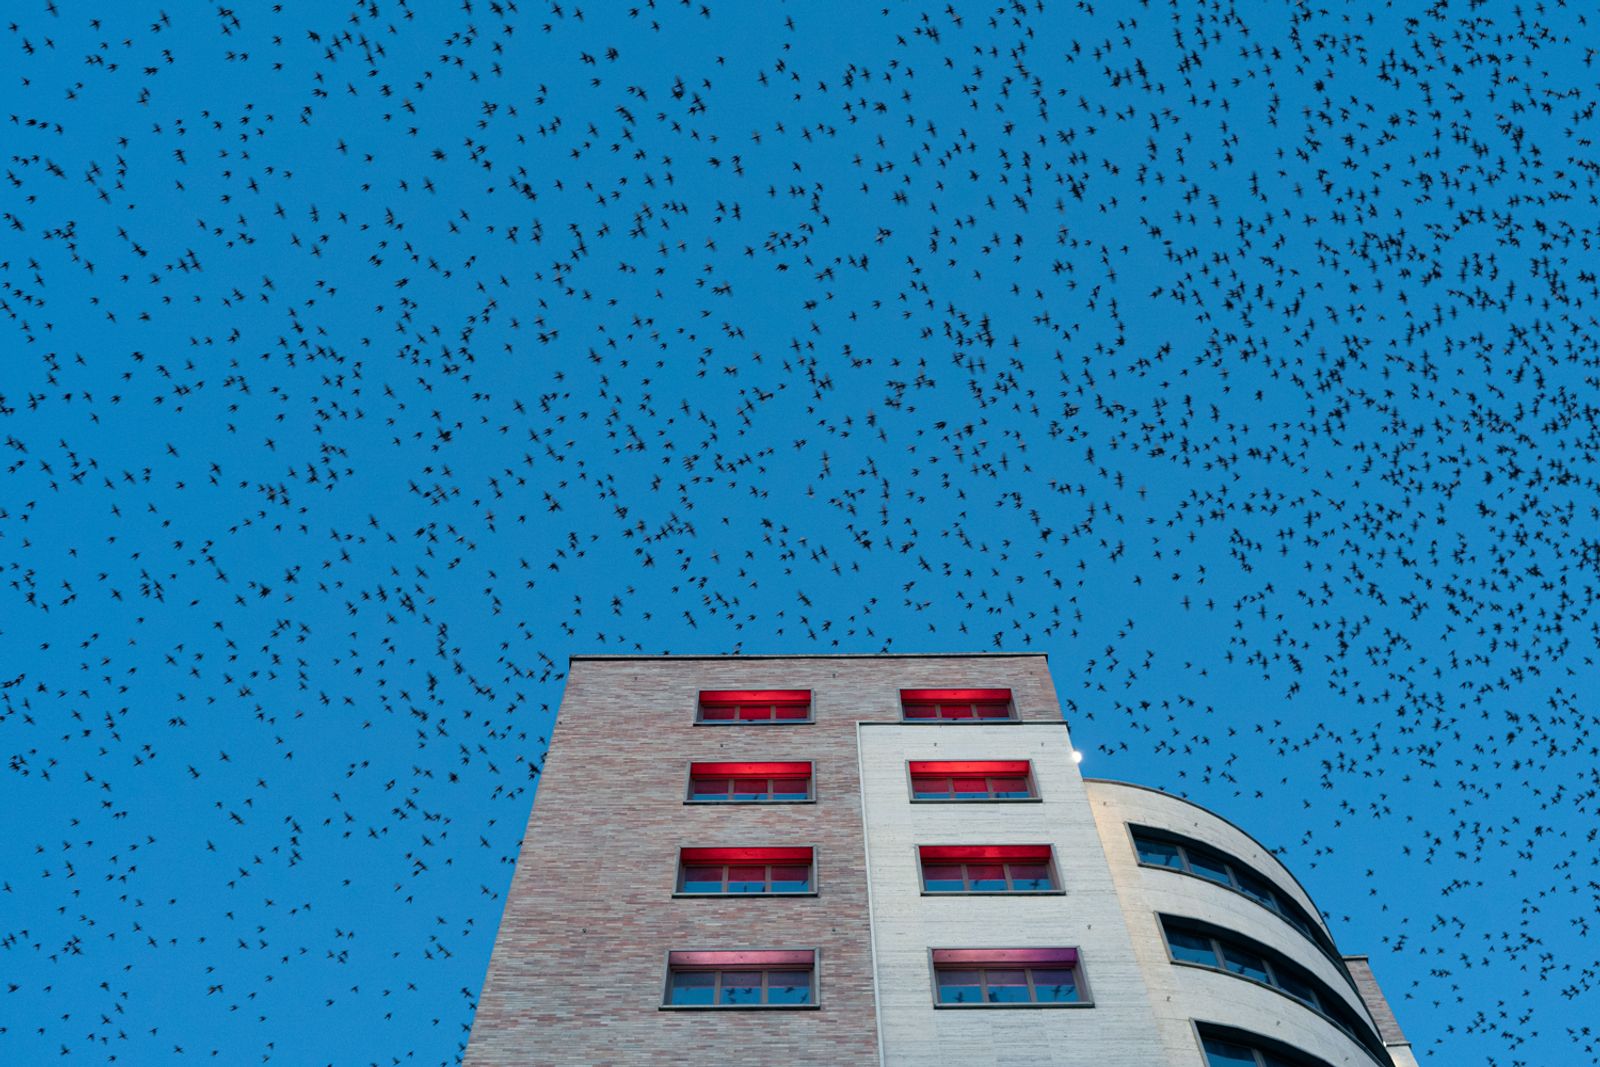 © Agnese Morganti - Milan, 2020. Starlings swarming over a hotel during the 2020 pandemic lockdown.